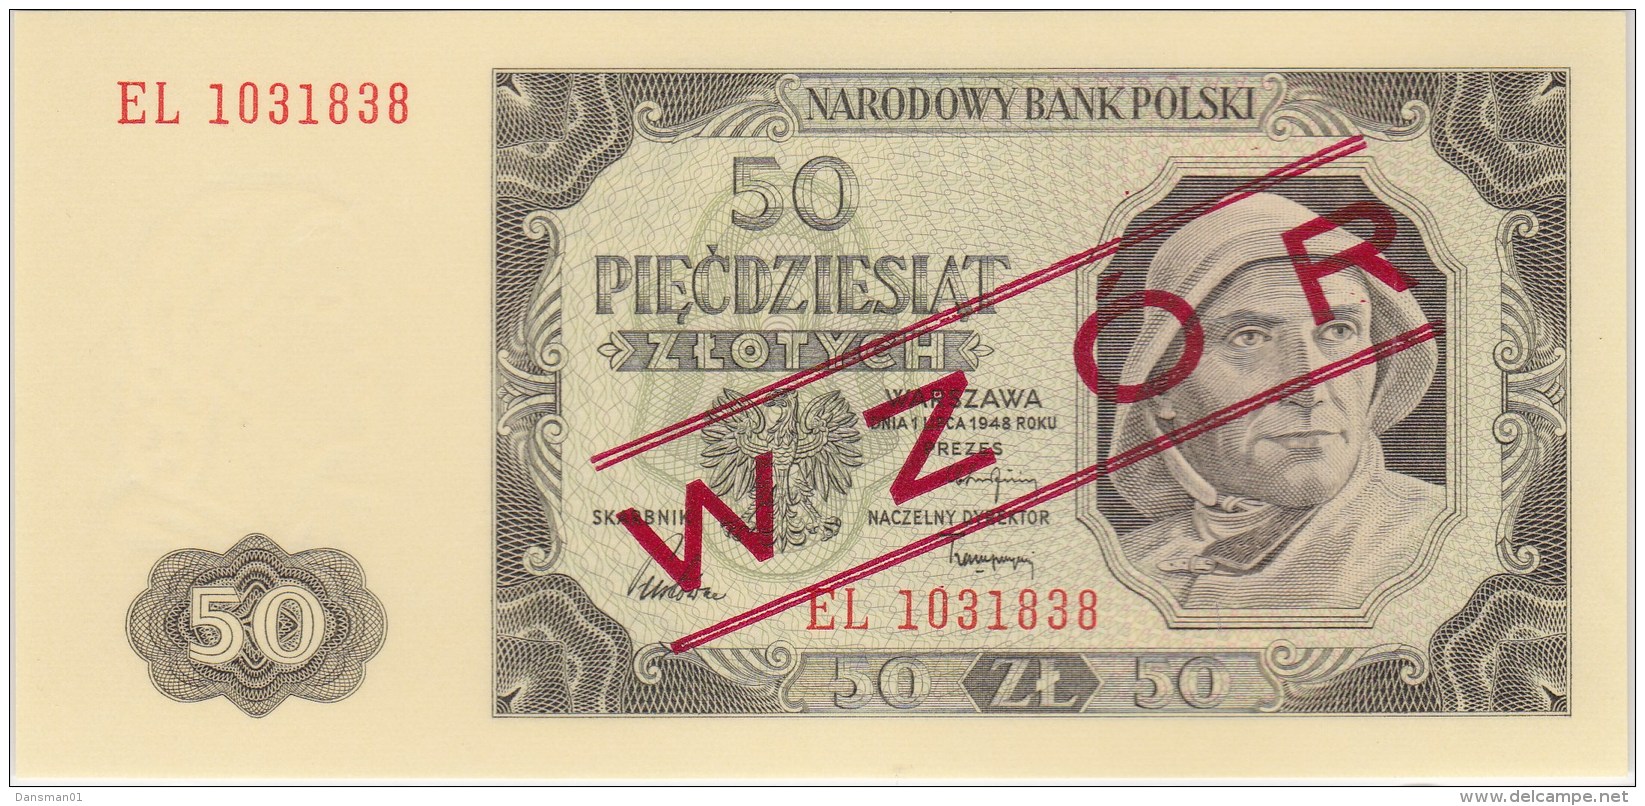 POLAND 1948 50 Zl WZOR EL 1031838 Uncirculated - Pologne